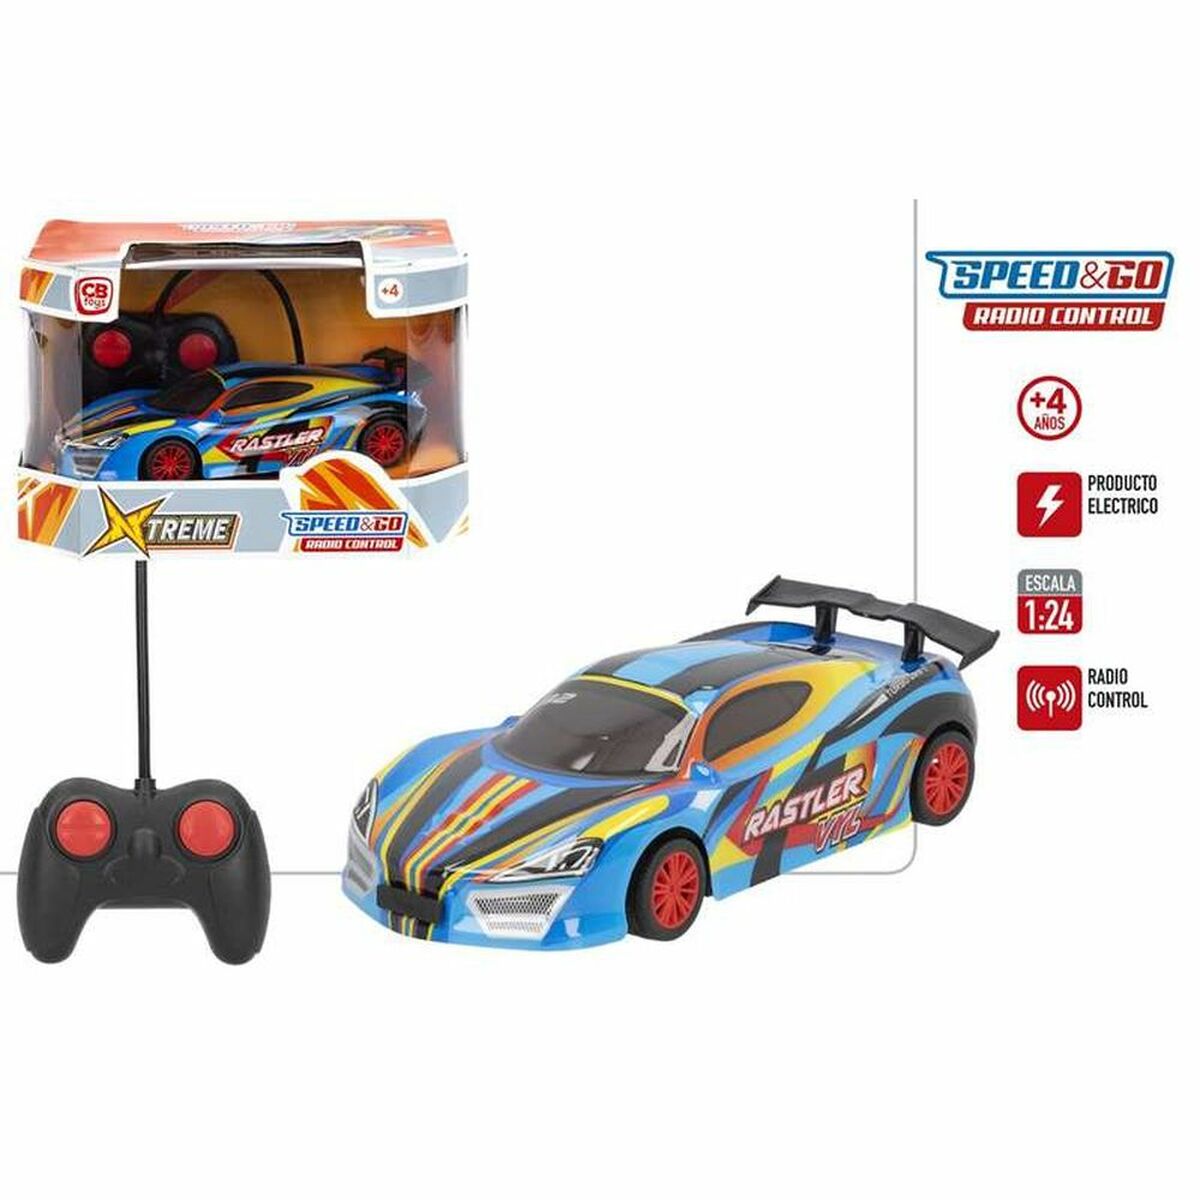 Speelgoedautootje Speed & Go 1:24